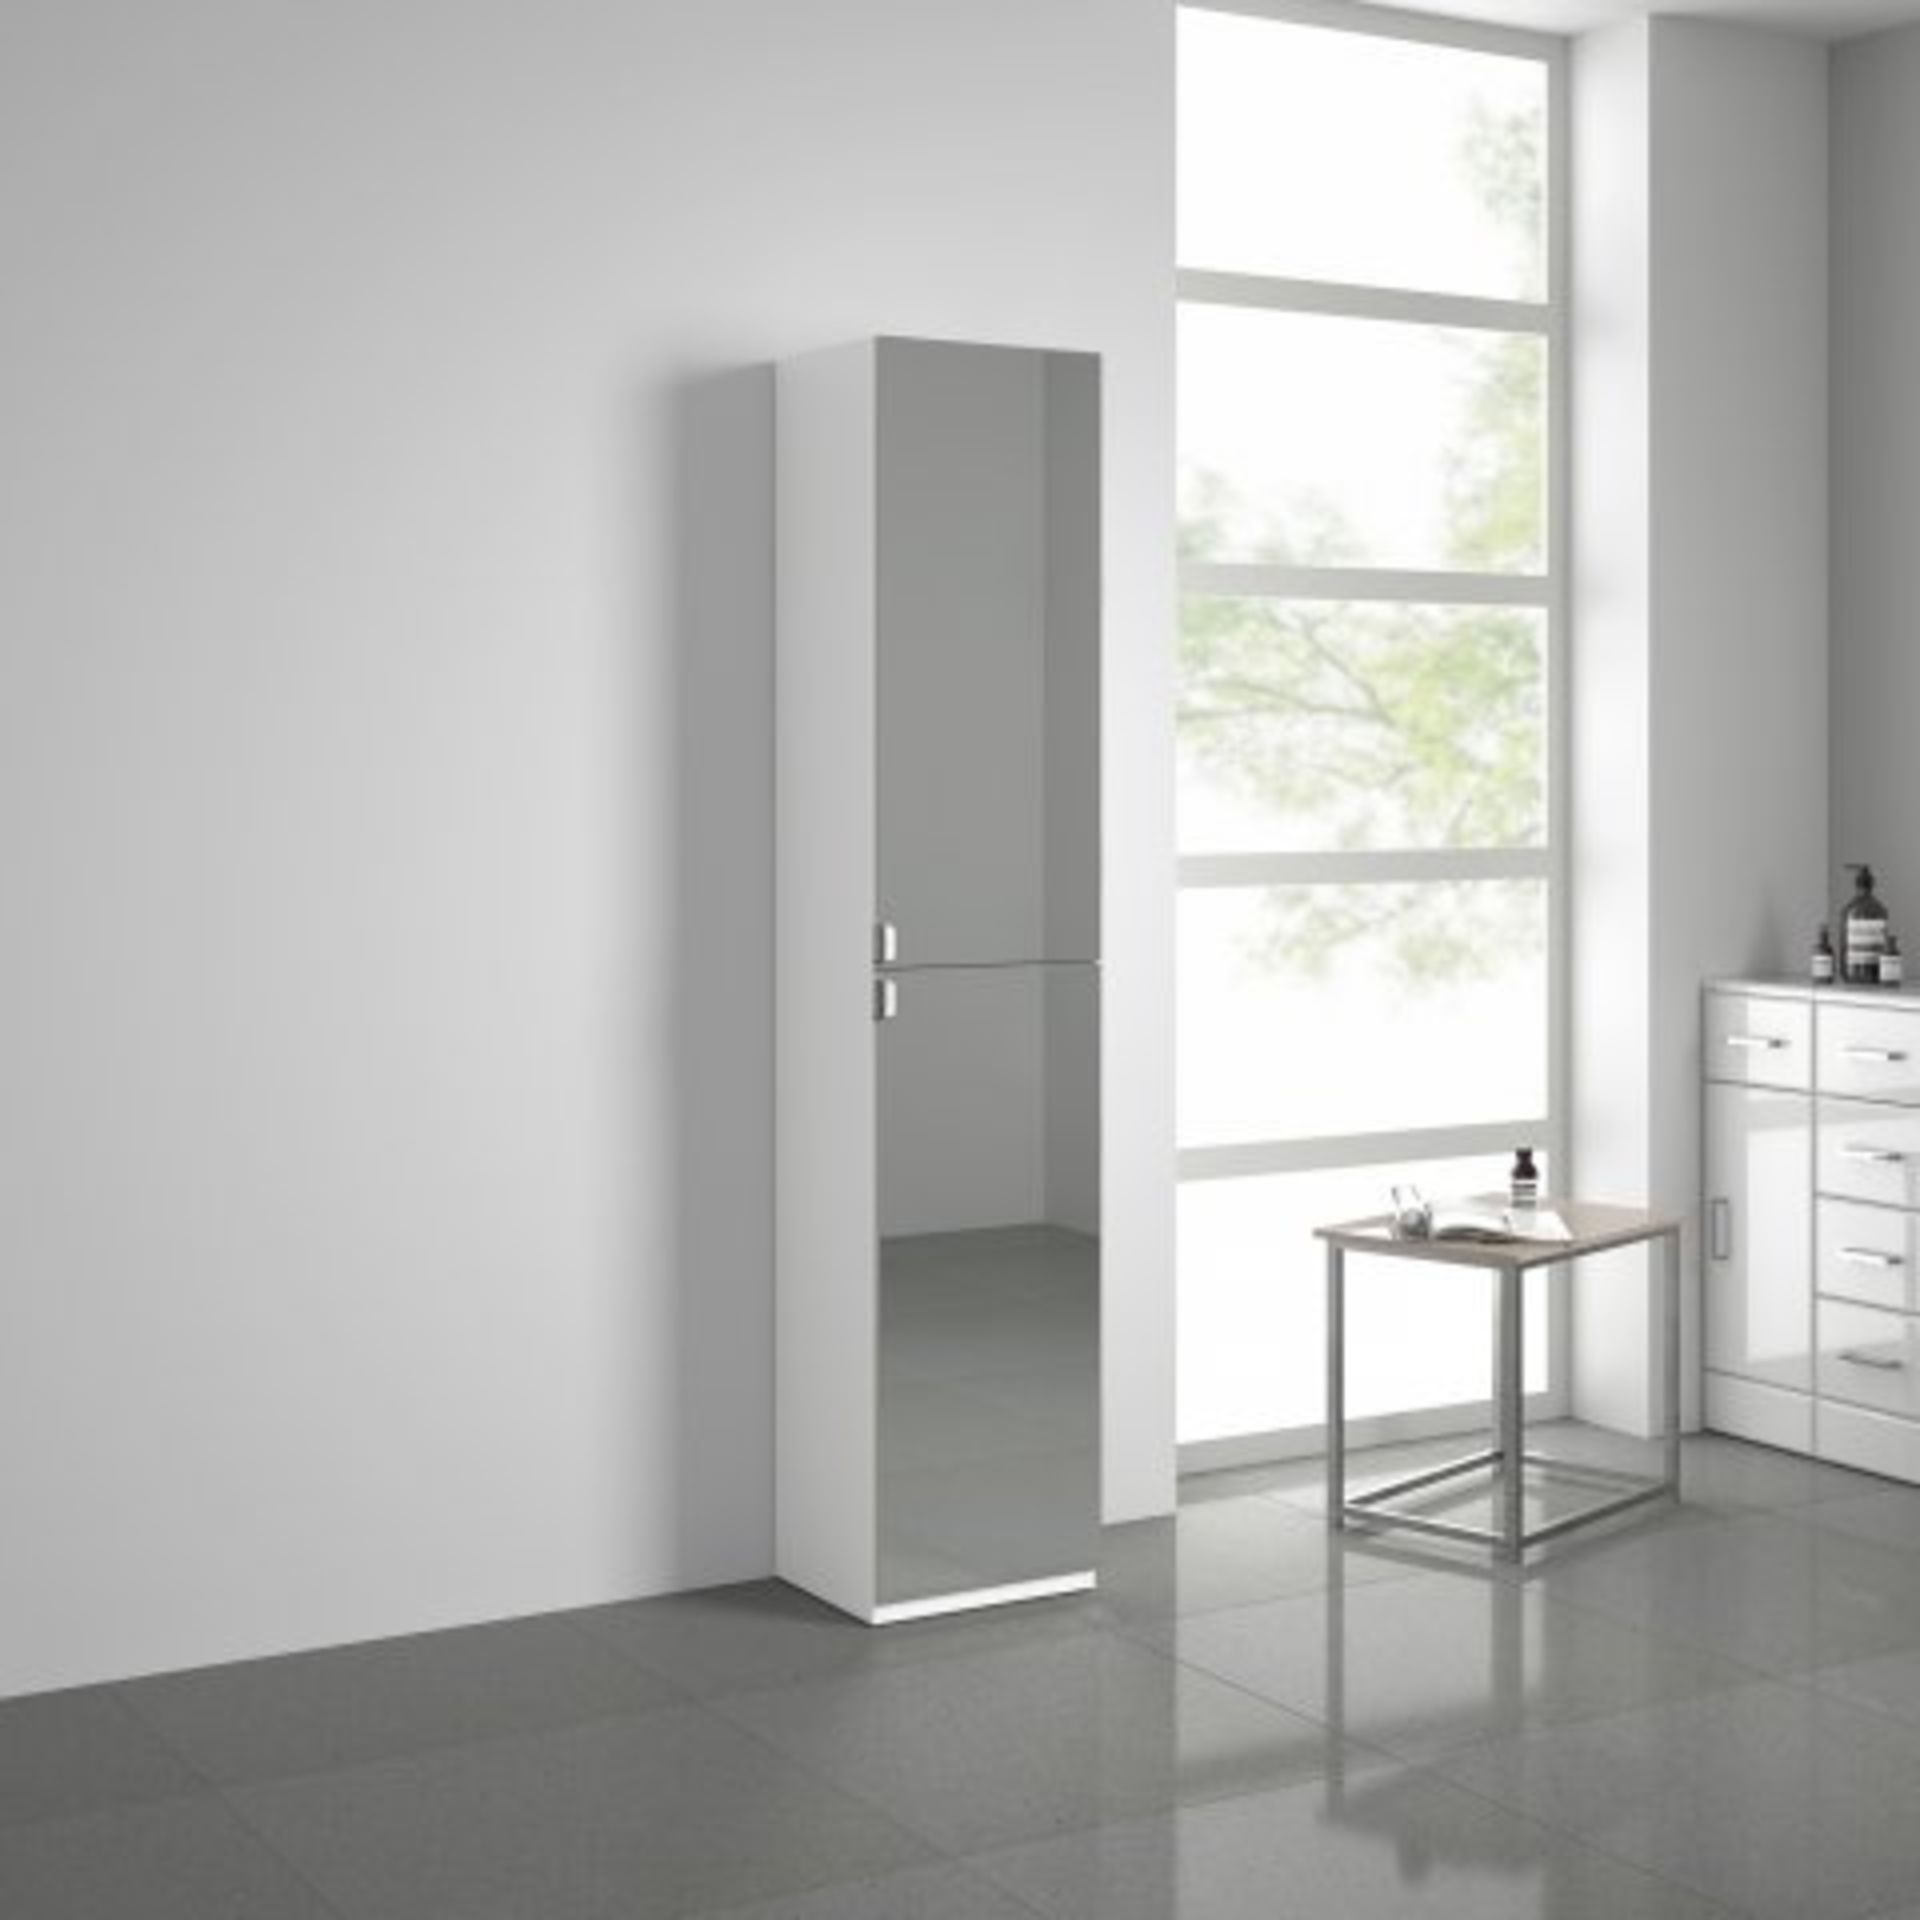 (K27) 1700x350mm Mirrored Door Matte White Tall Storage Cabinet - Floor Standing. RRP £339.99. - Image 2 of 5